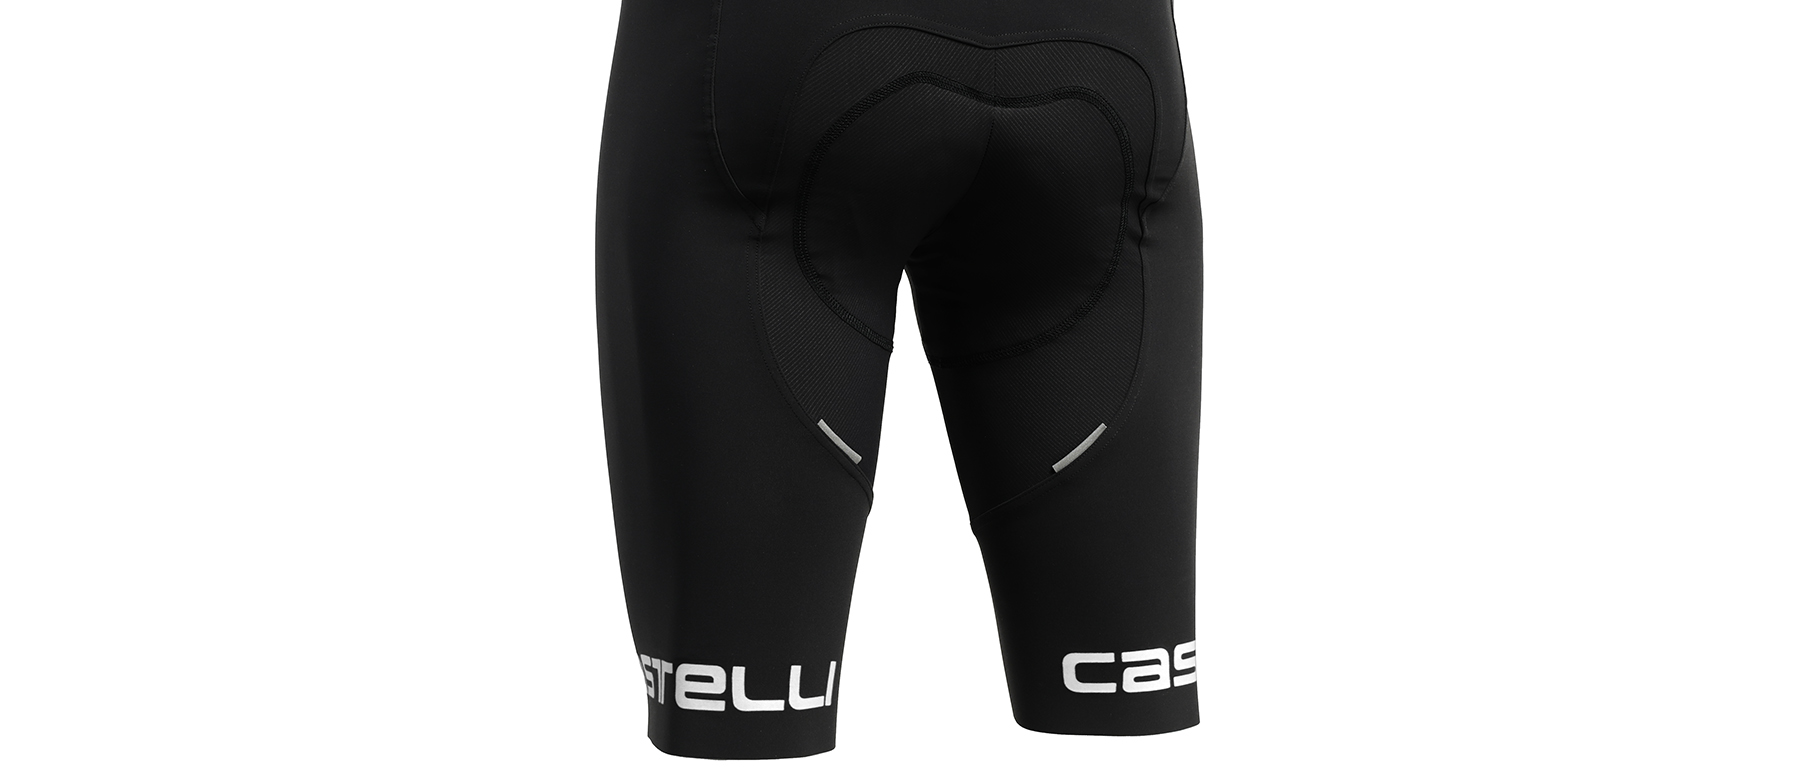 Castelli Free Aero RC Classic Bib Shorts